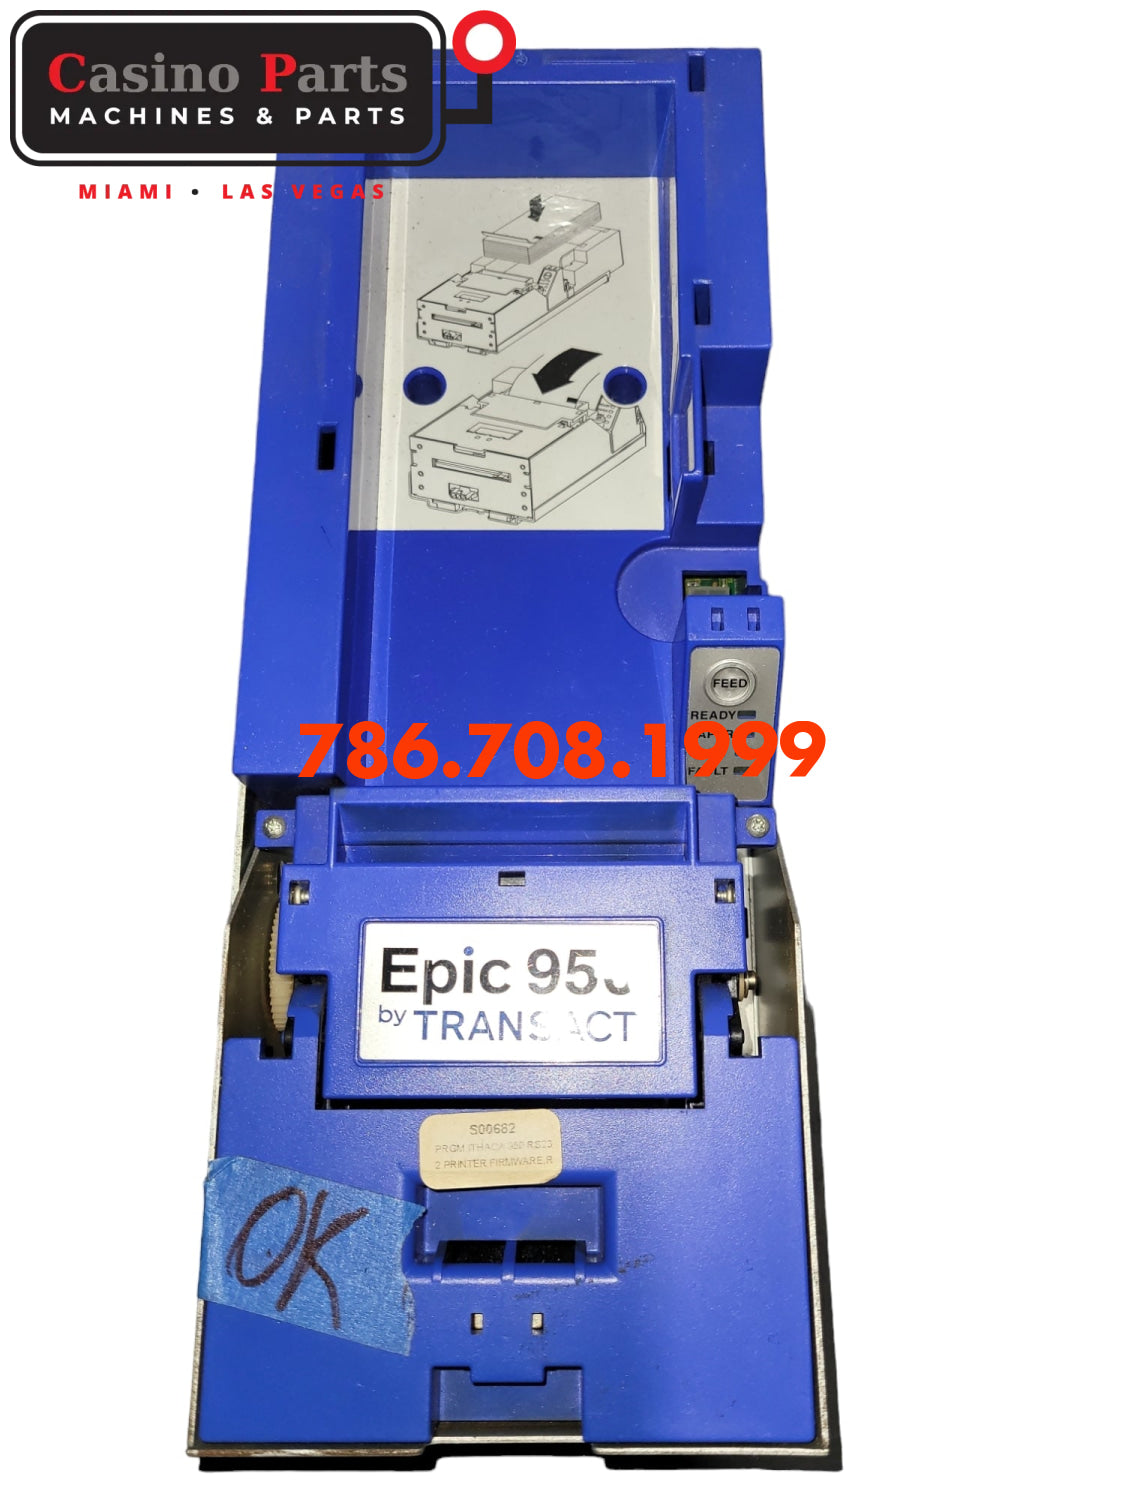 Epic 950 - Universal Ticket Printer Usb